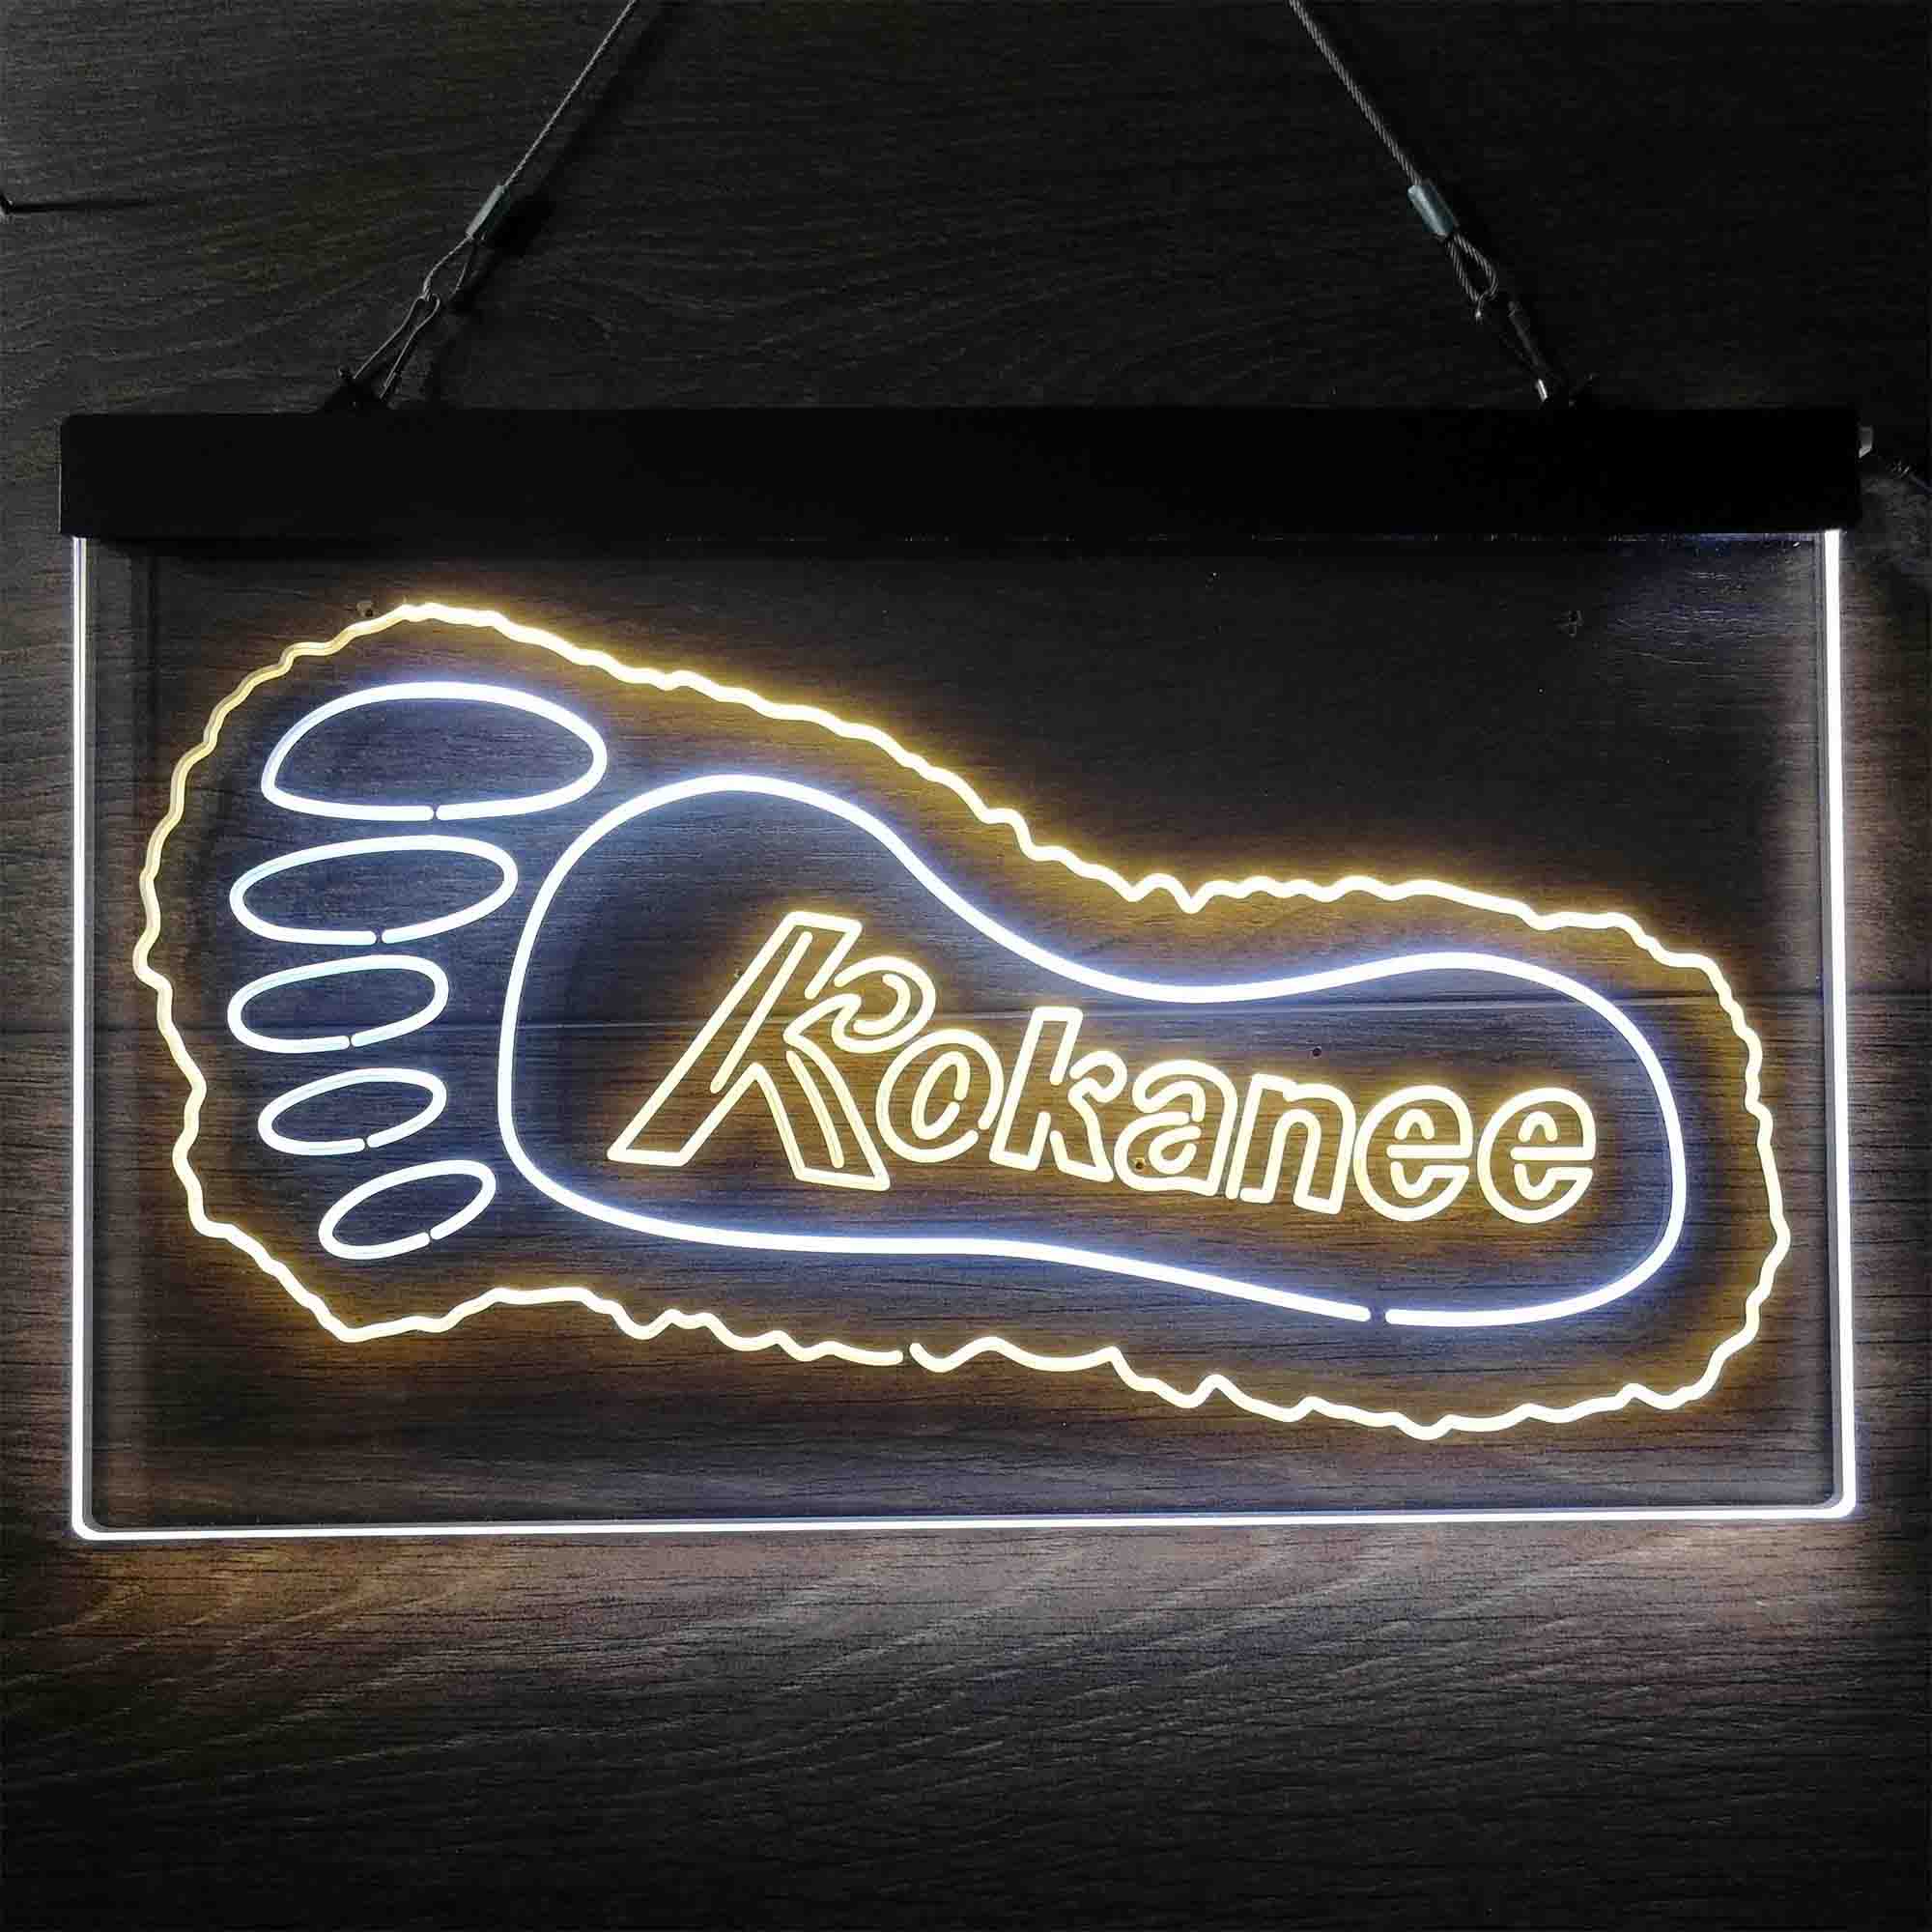 Kokanee Beer Foot Neon-Like LED Sign